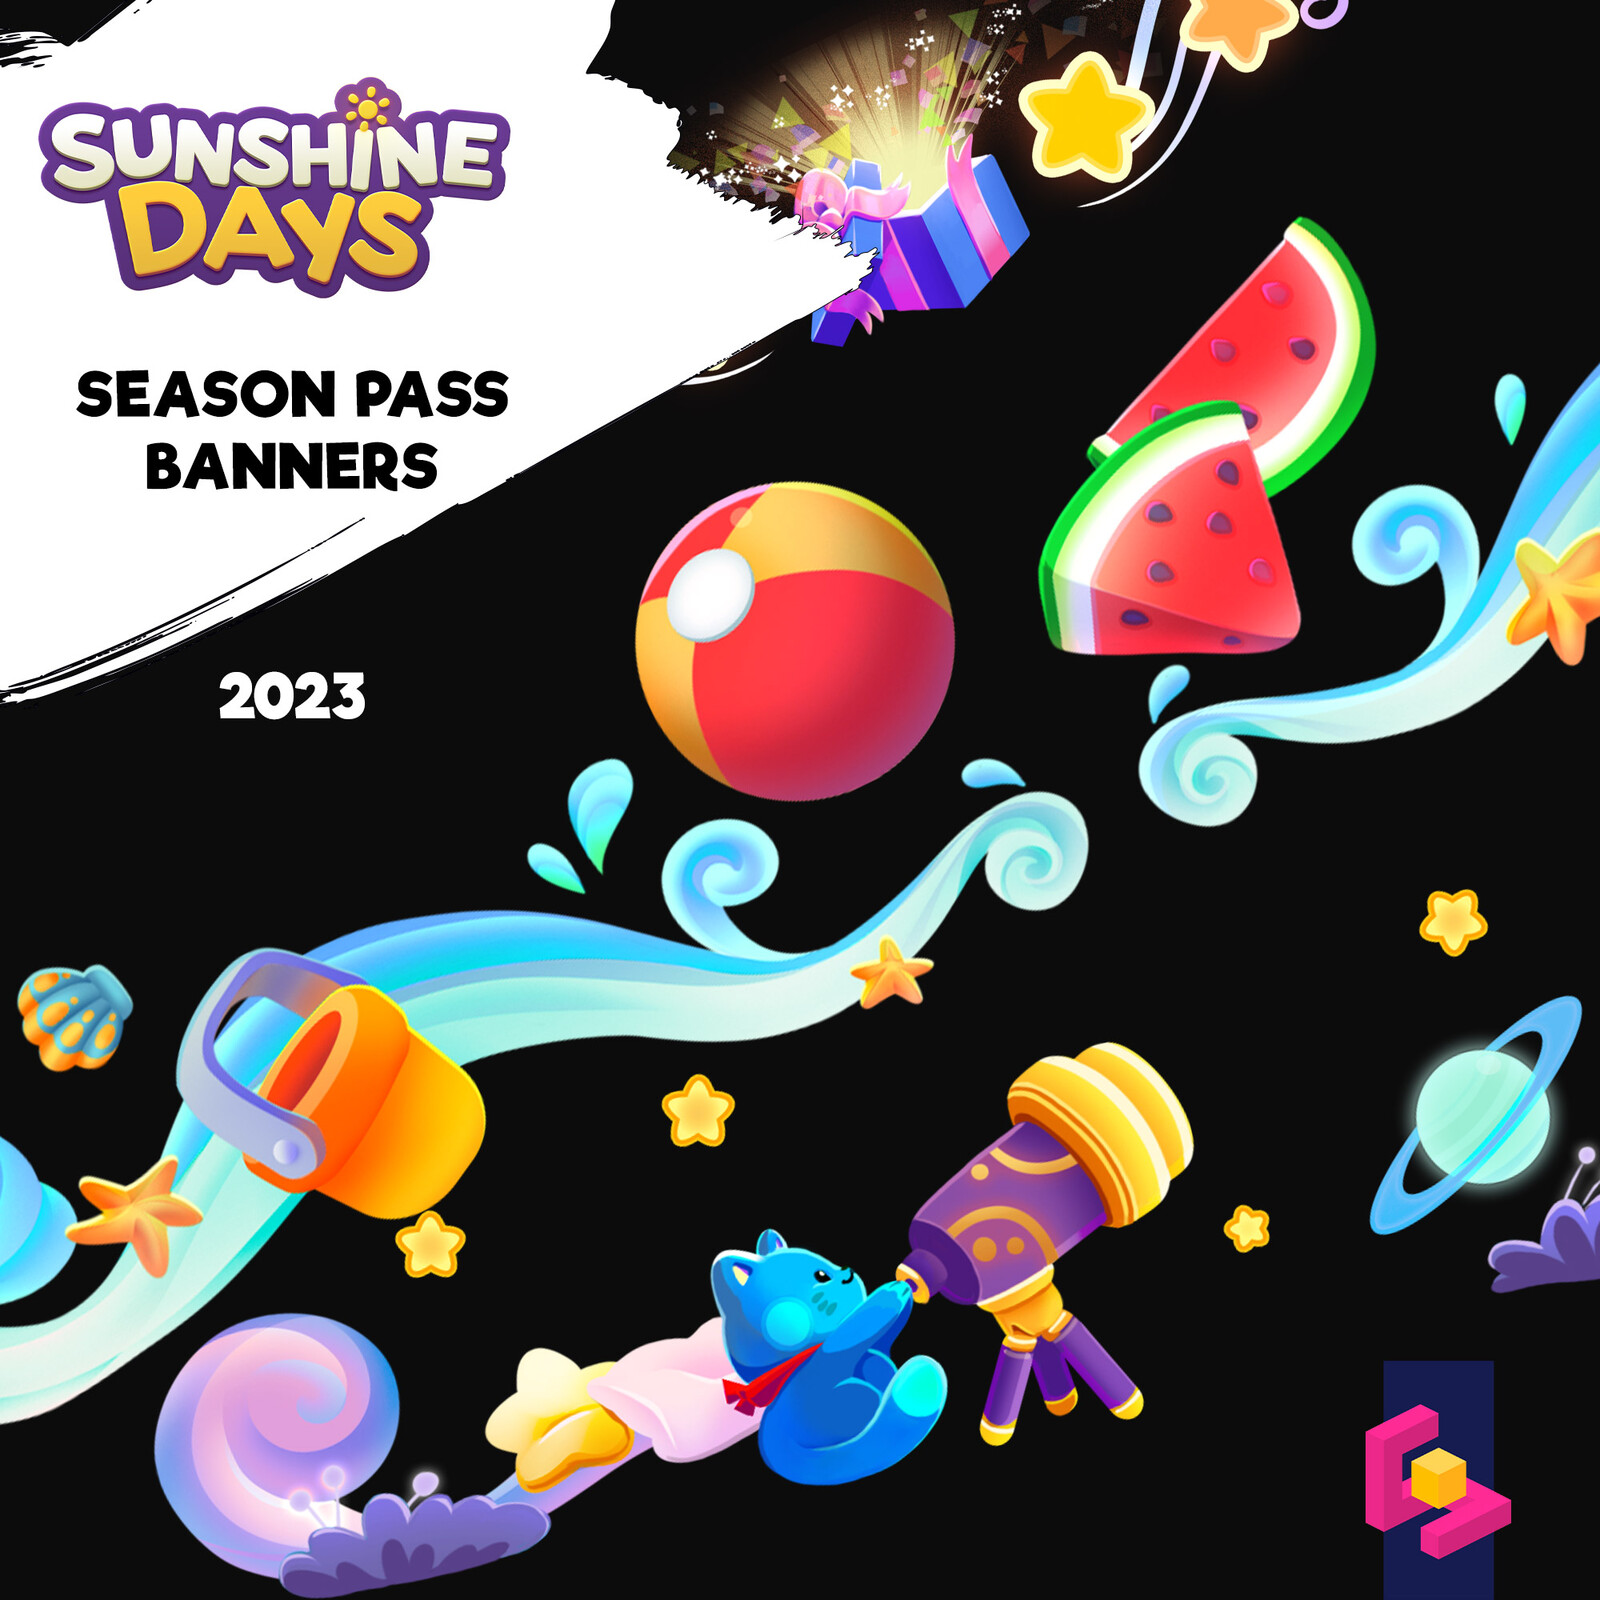 Sunshine Days - Season Pass popup banners 2023